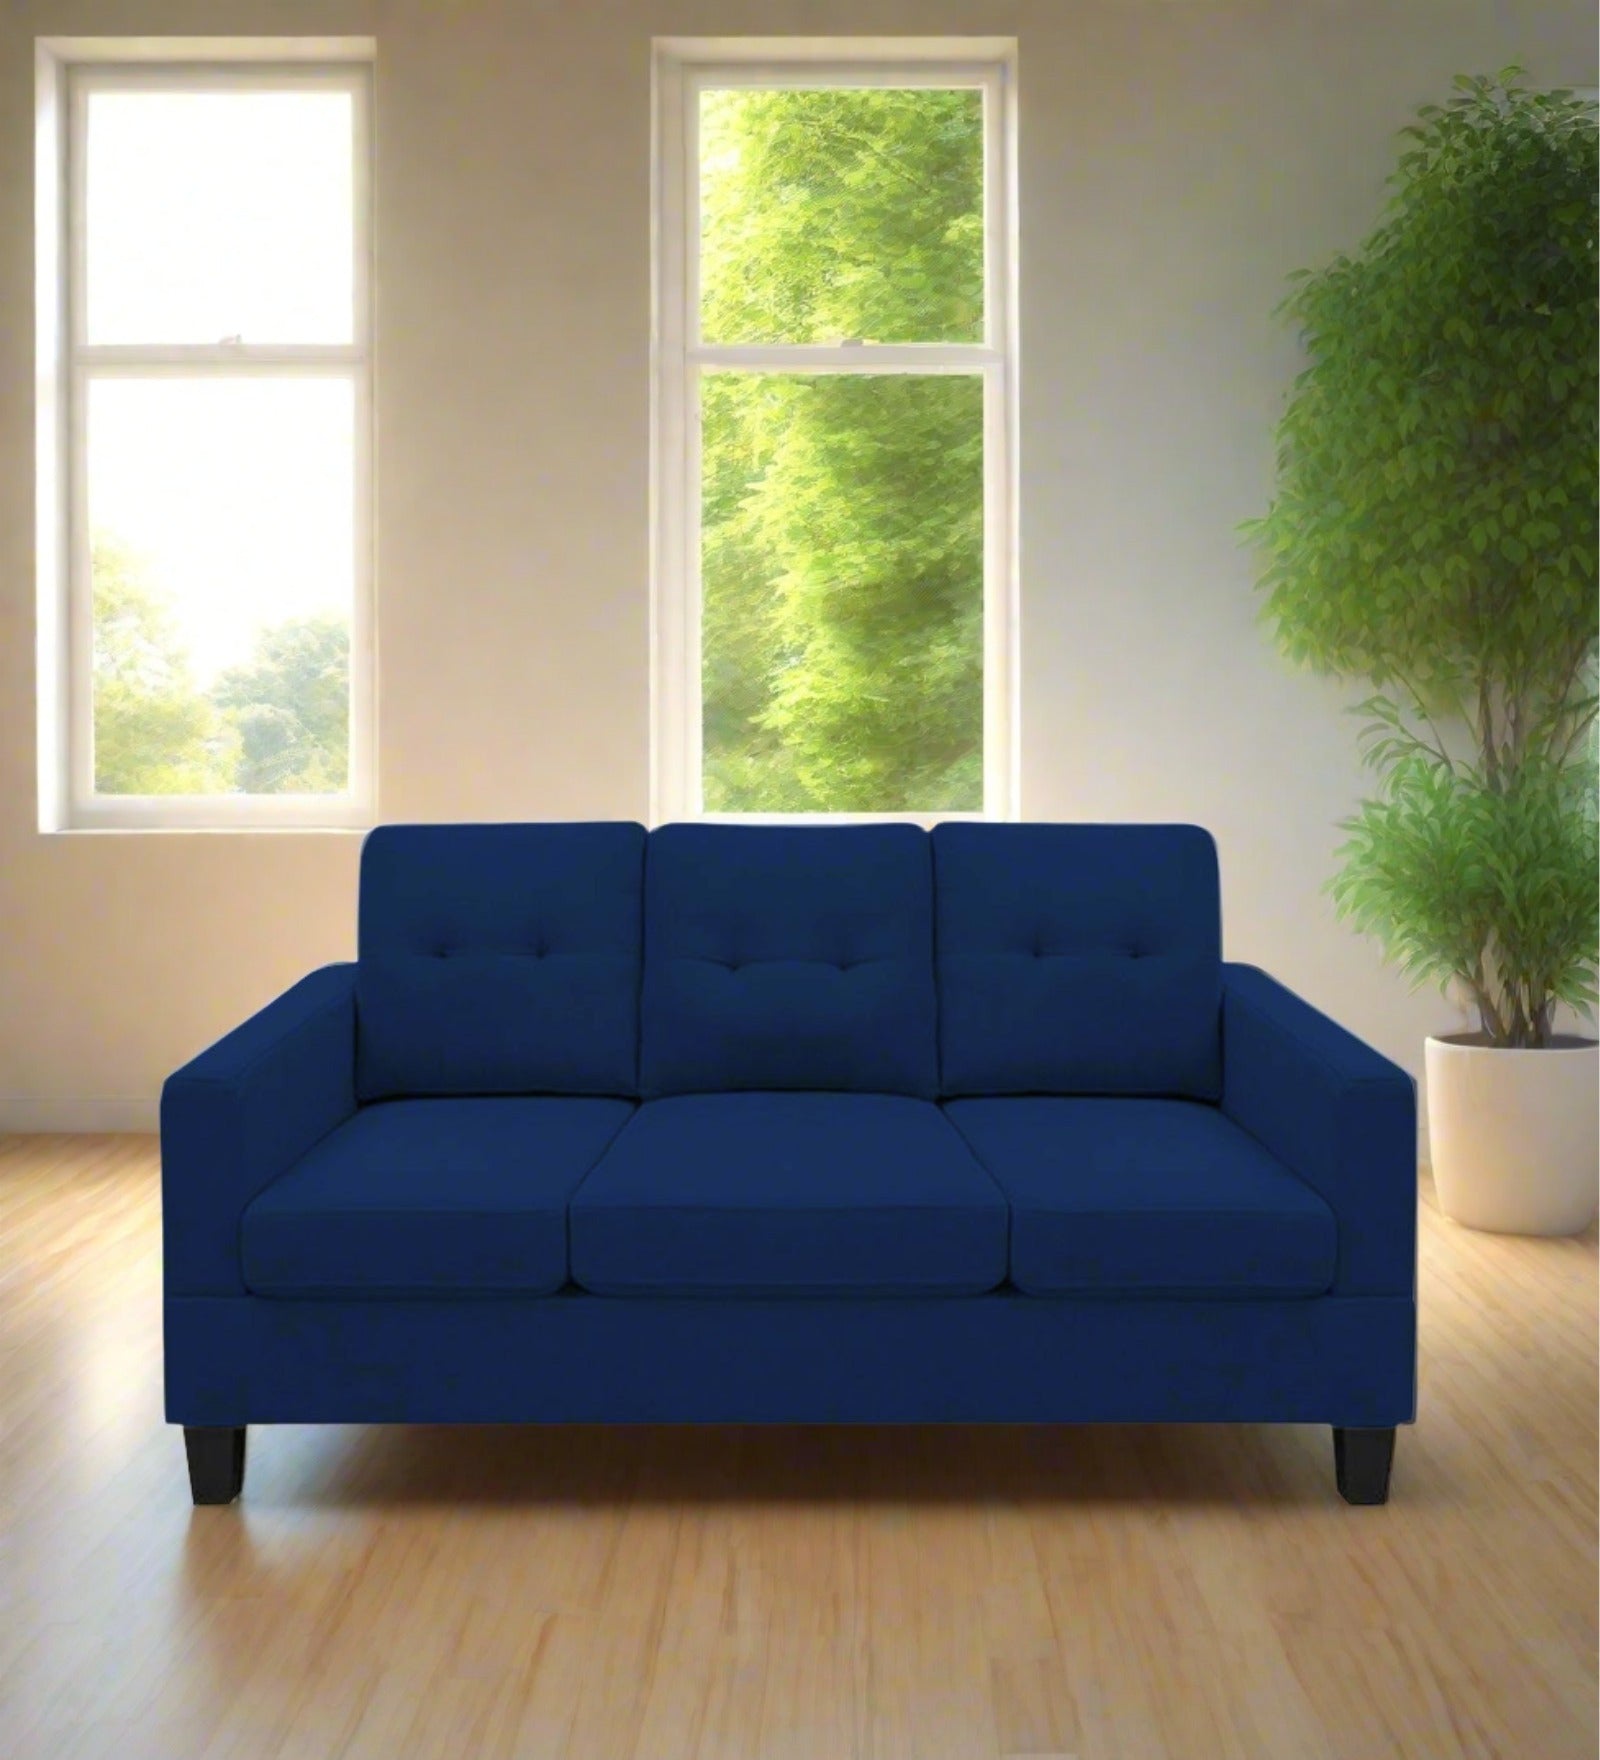 Thomas Fabric 3 Seater Sofa in Royal Blue Colour